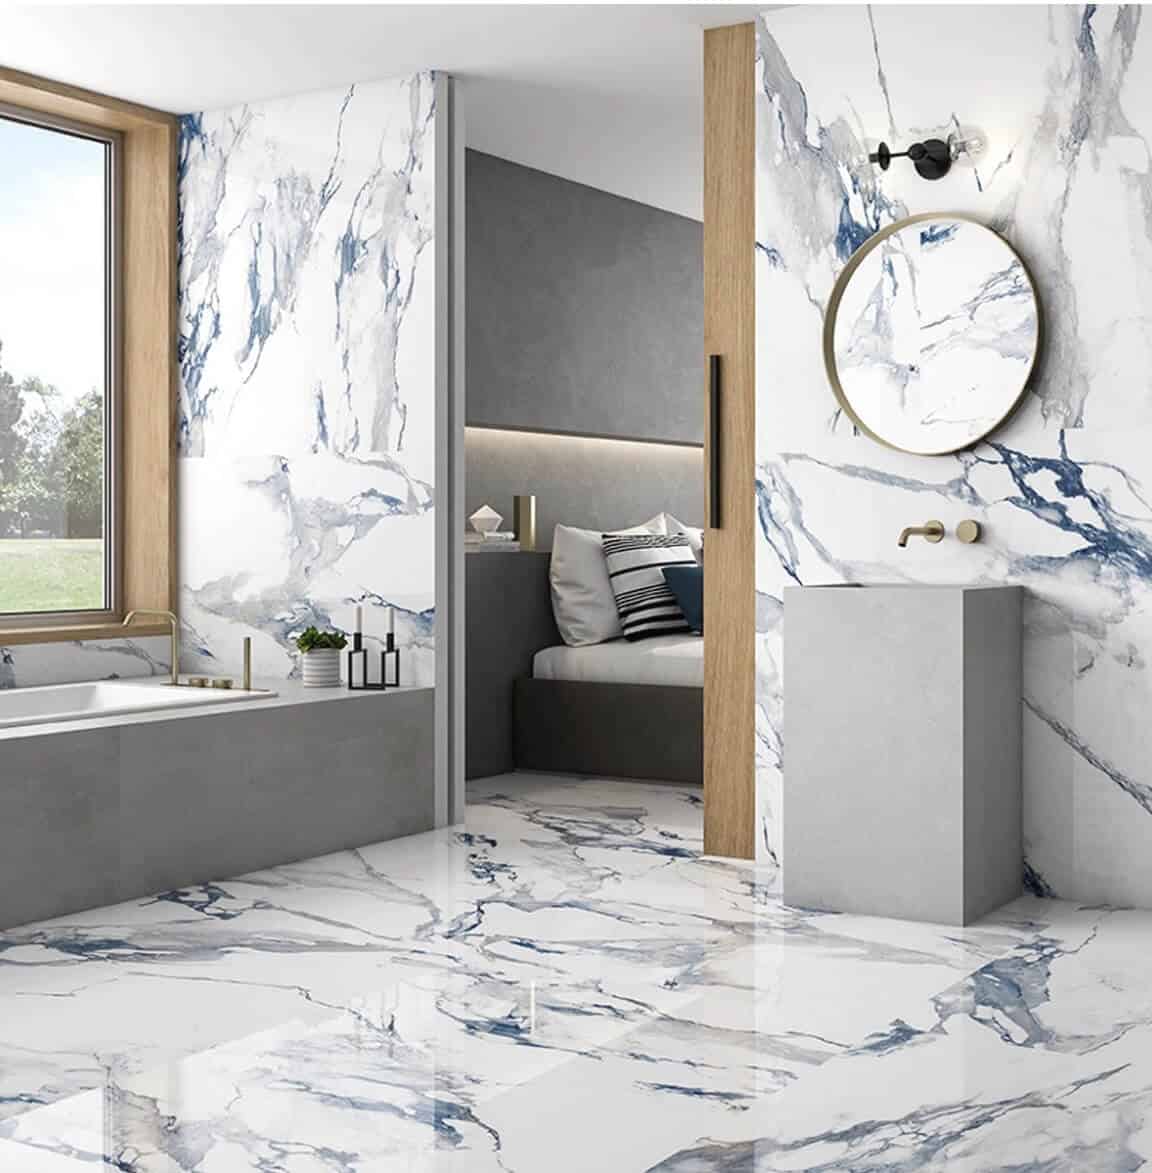 marble effect digital tiles design for floor and walls of bathroom